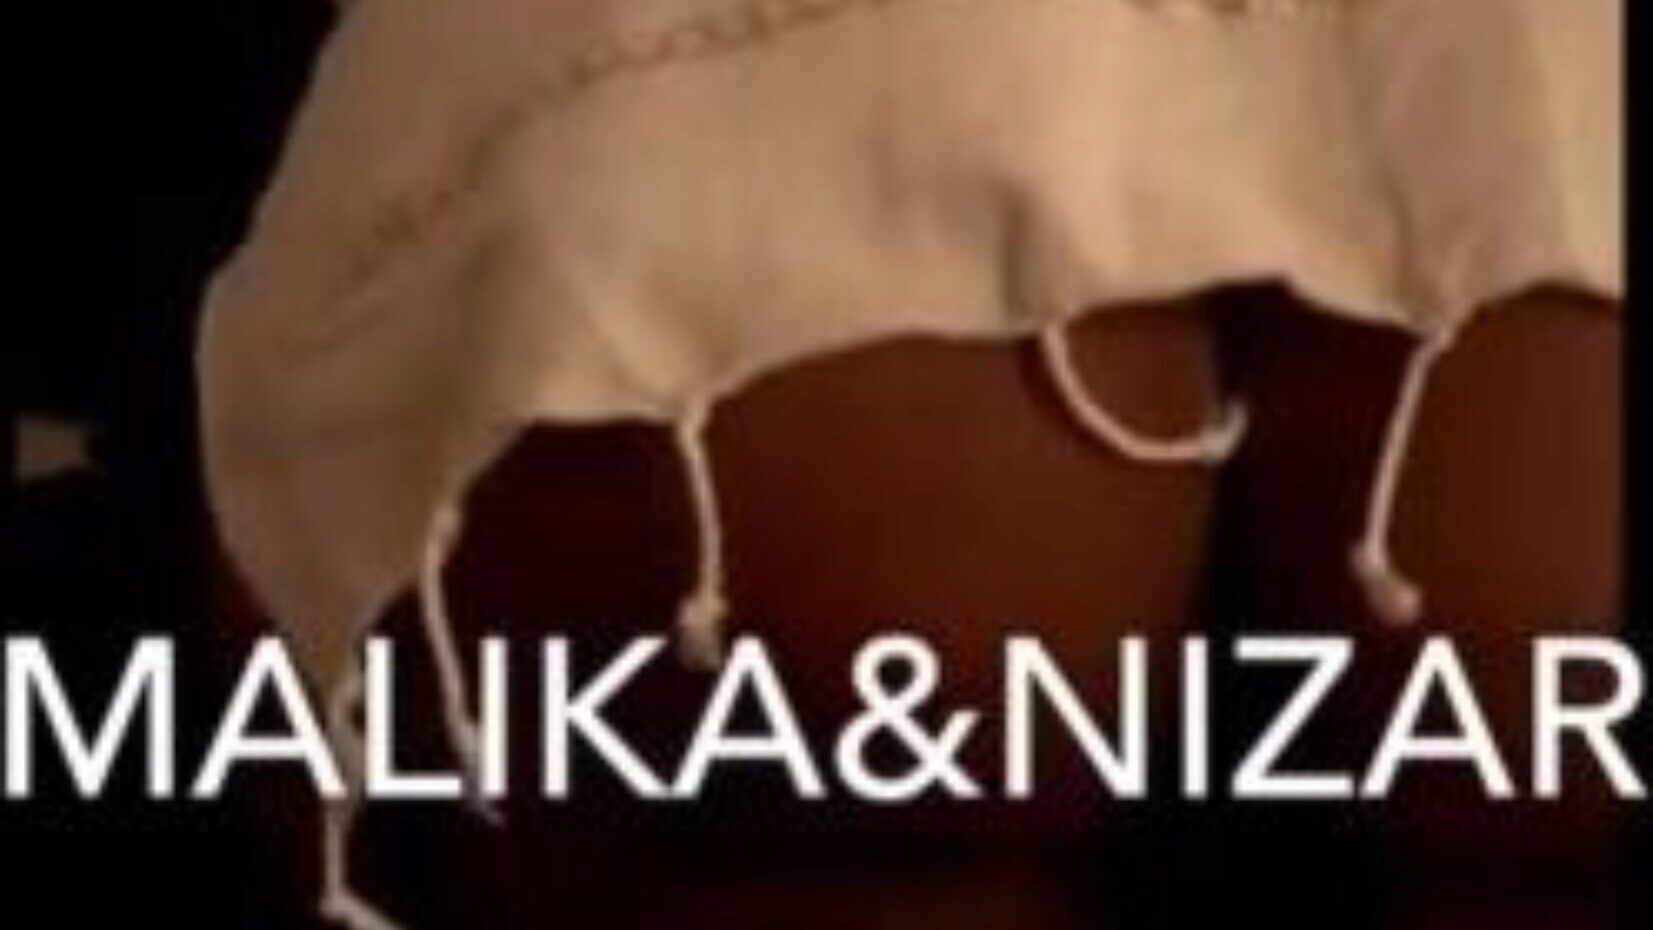 Malika & Nizar: فيديو إباحي فاضح ومثير مجاني D3 - Xhamster شاهد Malika & Nizar Tube orgy Episode مجانًا للجميع على xhamster ، مع السرب الموثوق من مشاهد الفيديو الإباحية التونسية العربية والمثيرة